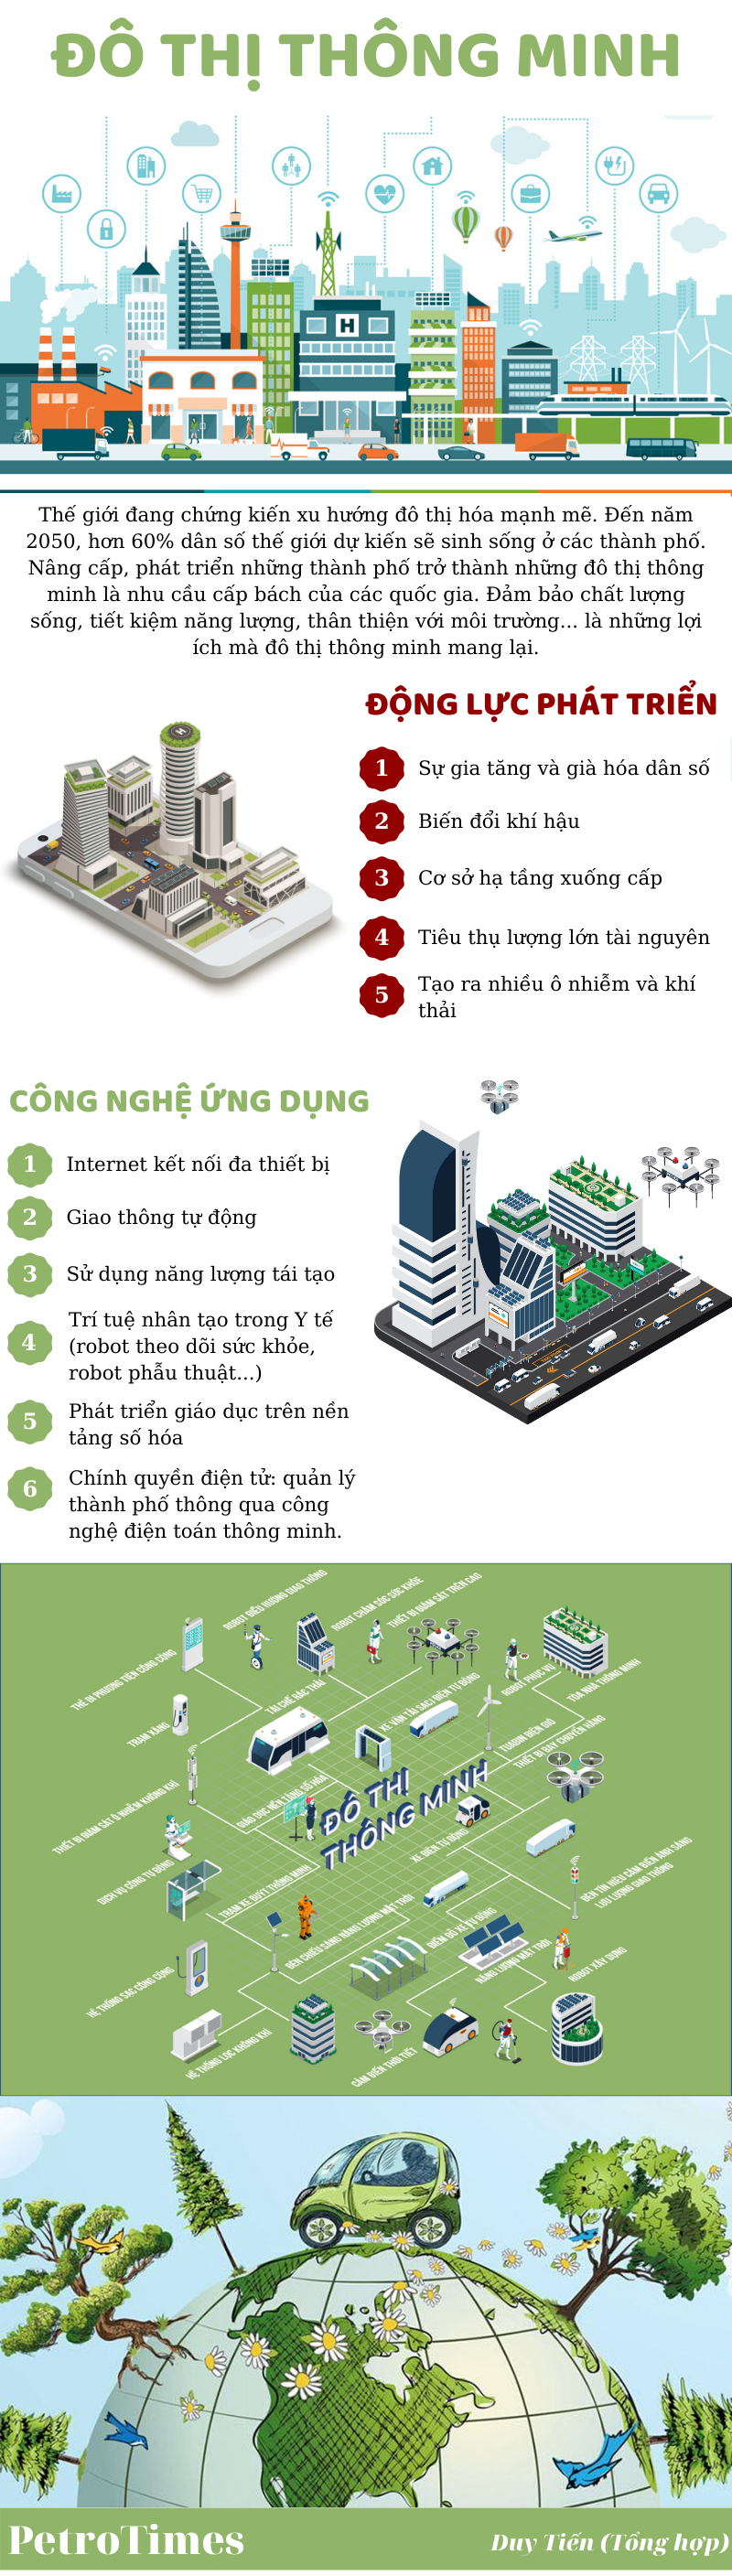 infographic do thi thong minh mo hinh thanh pho tuong lai